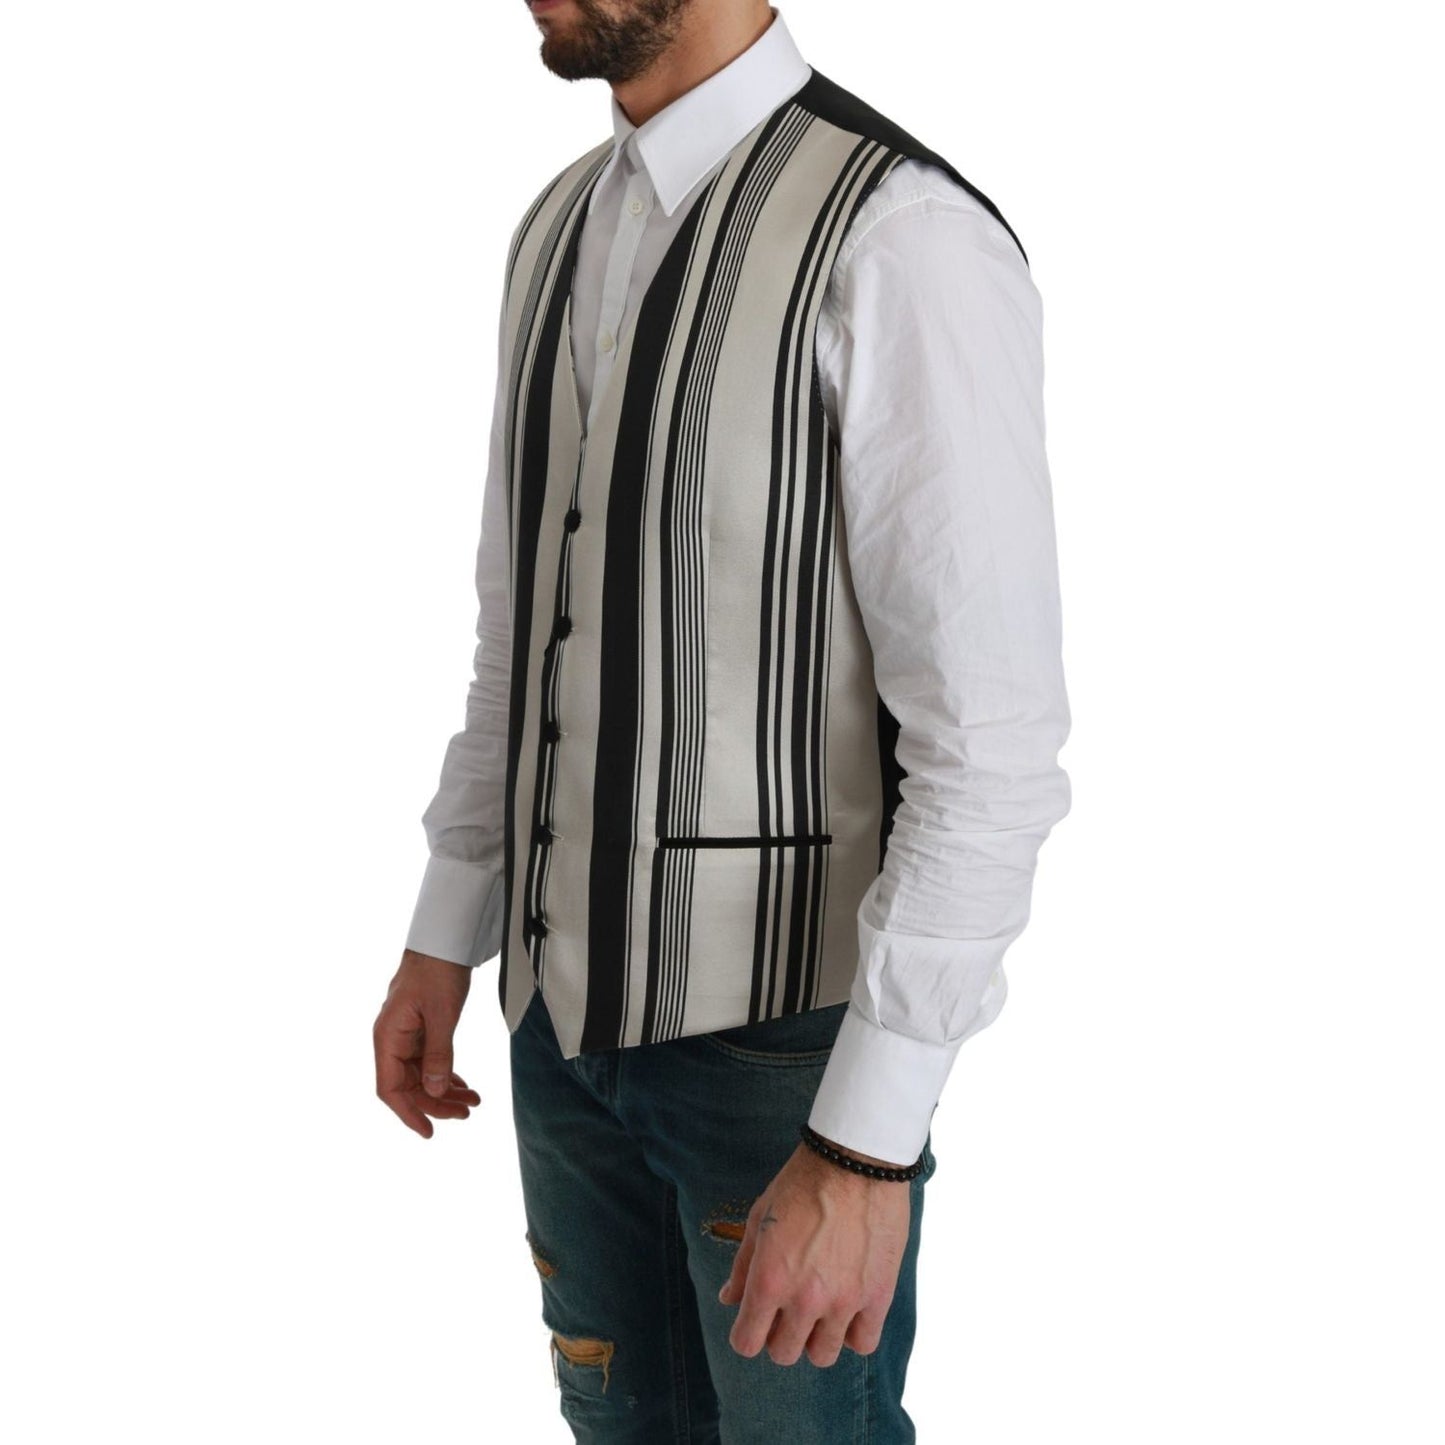 Dolce & Gabbana Stripe Cotton Silk Dress Vest white-black-stripes-waistcoat-formal-vest